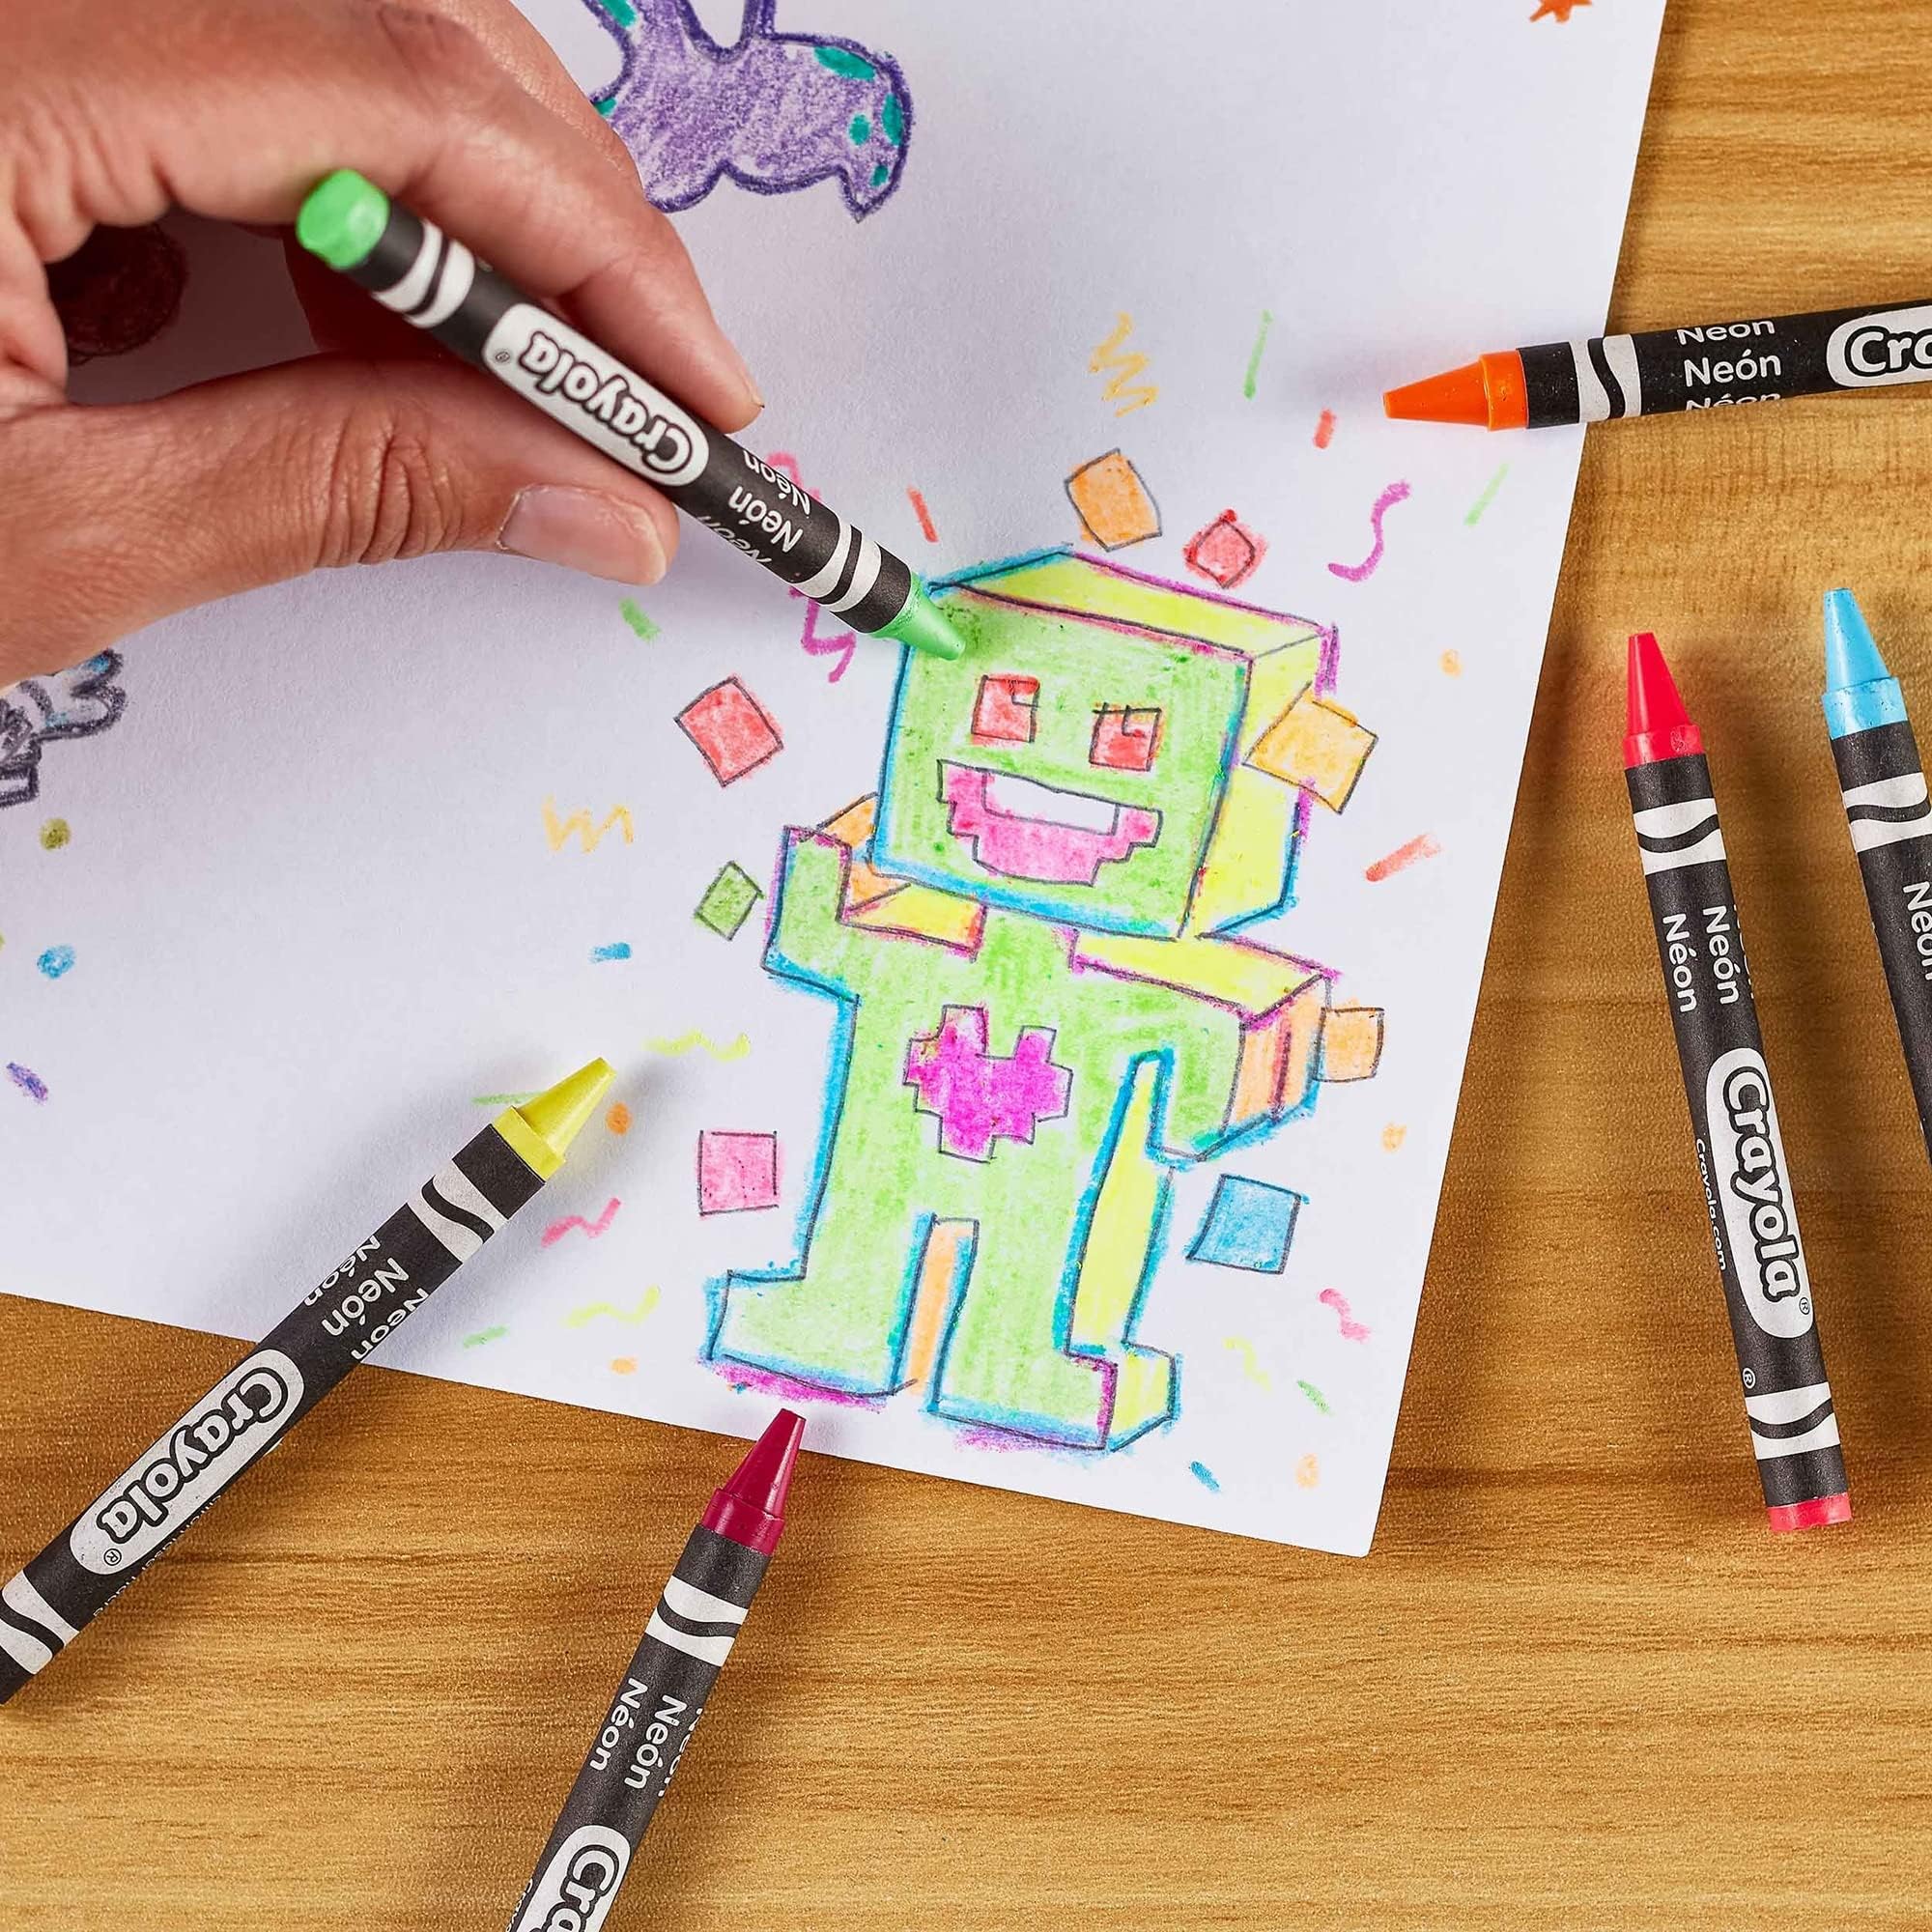 Crayola Neon Crayons, Back To School Supplies, 24 Count